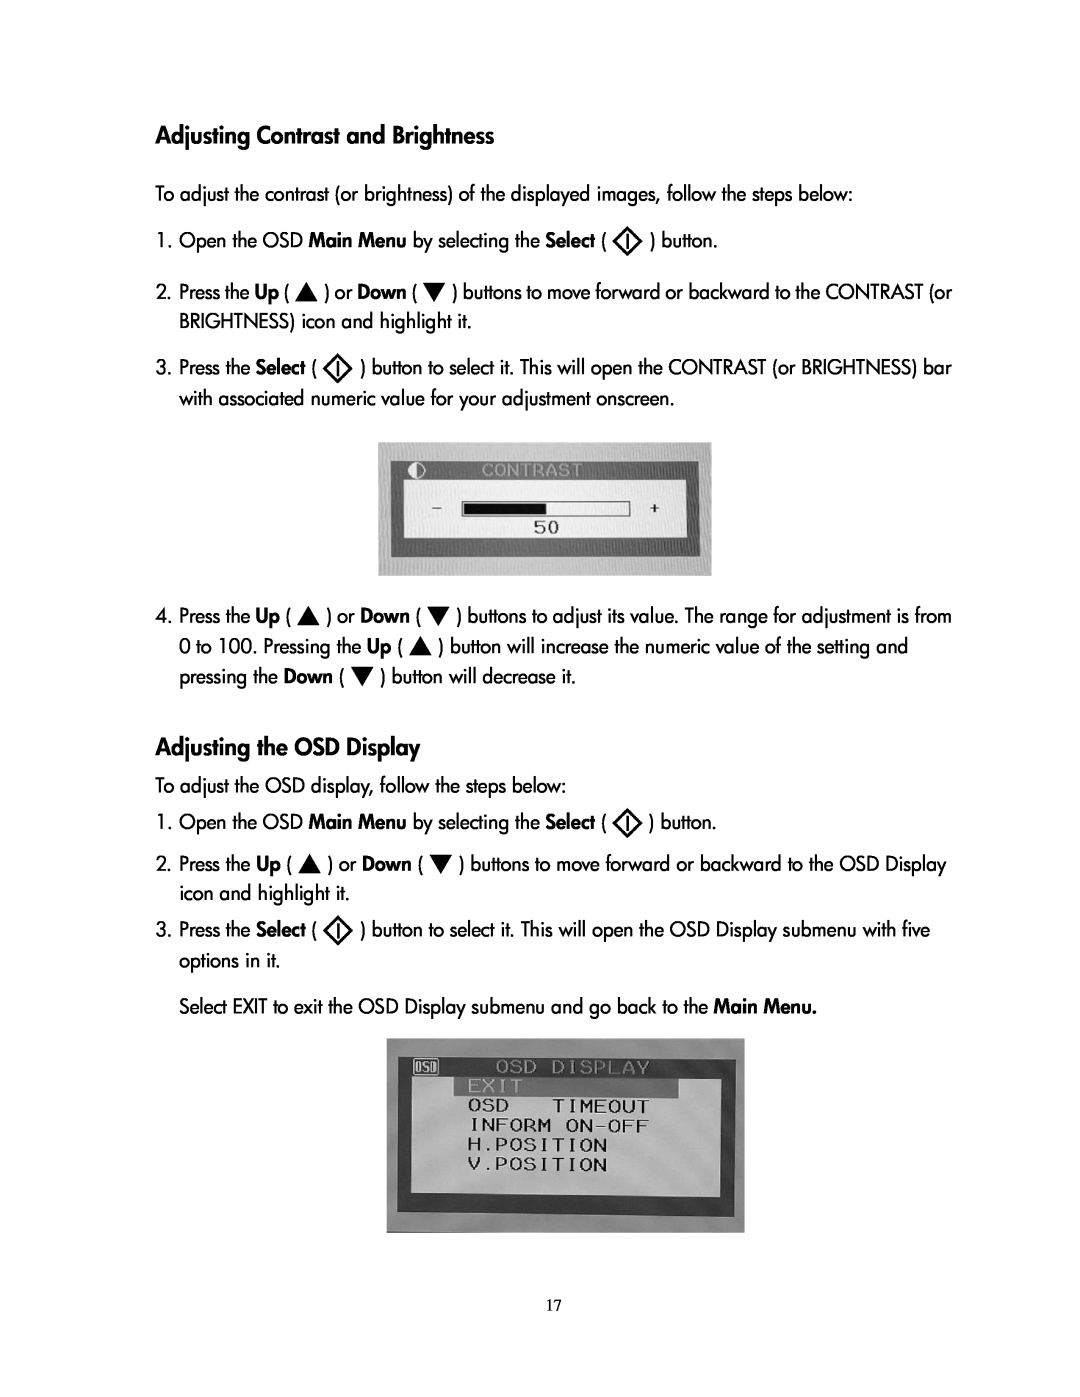 Compaq 1501 manual Adjusting Contrast and Brightness, Adjusting the OSD Display 